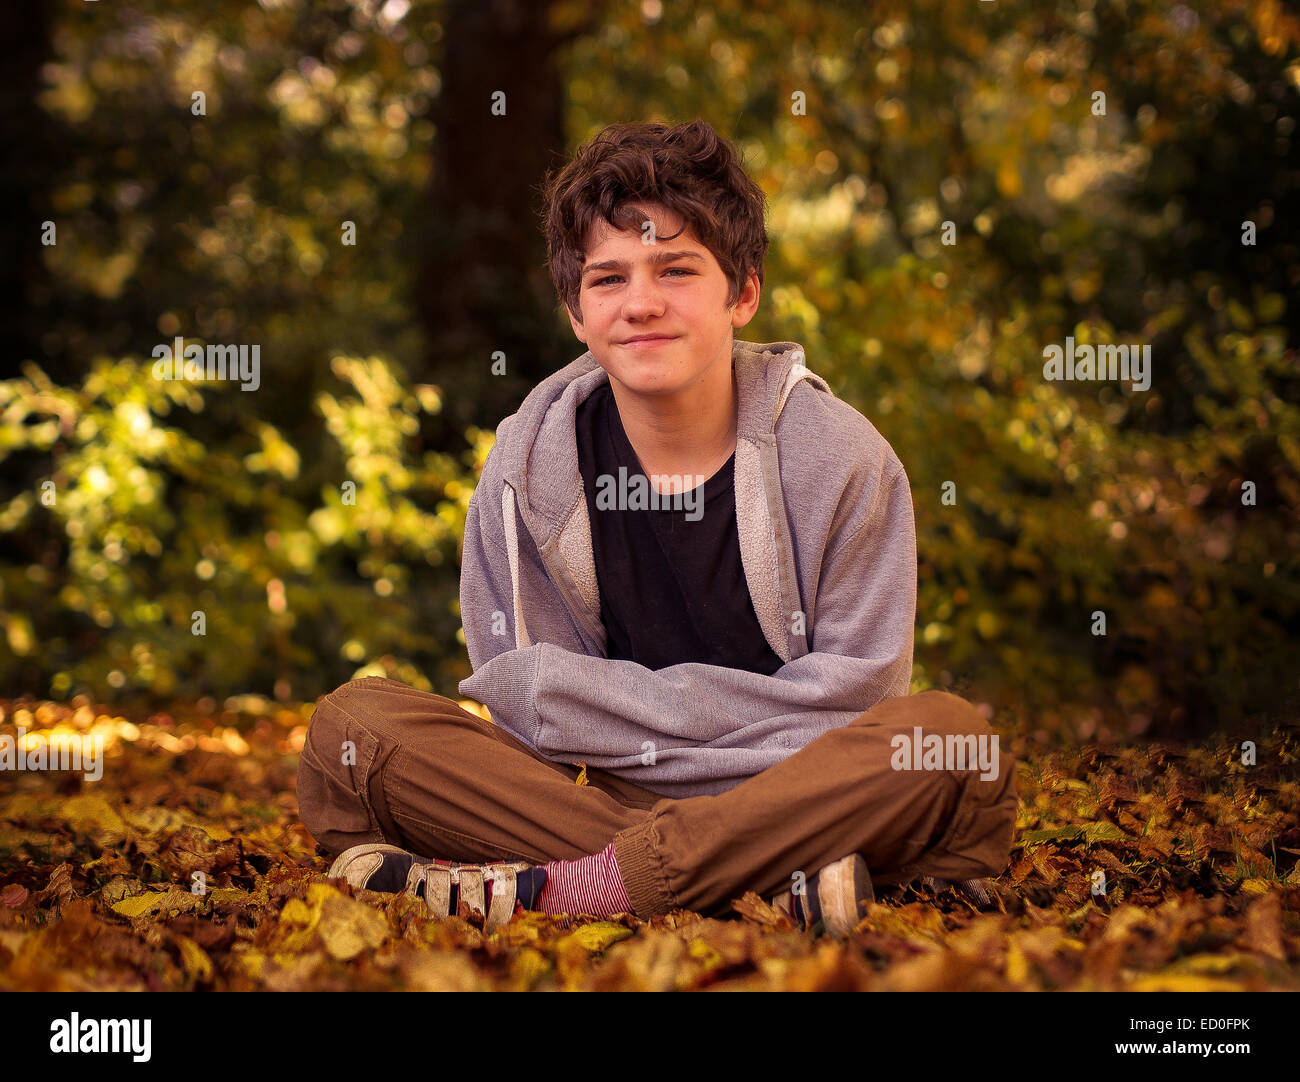 Boy sitting cross-legged in autumn leaves Stock Photo